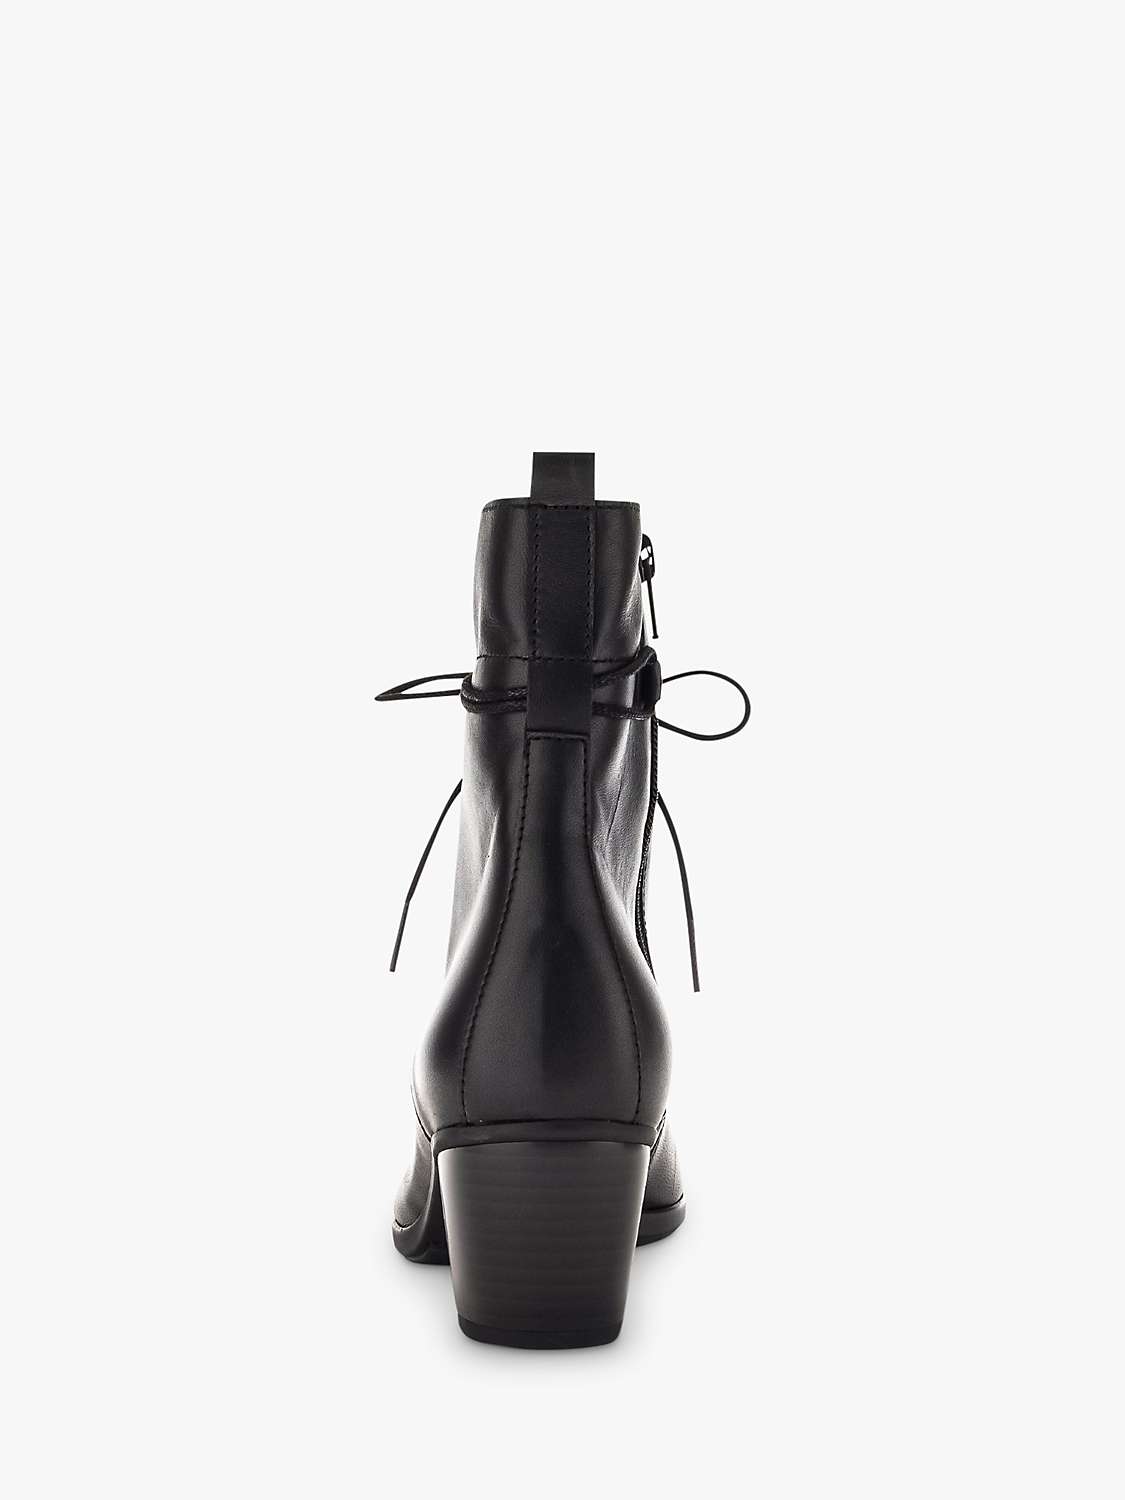 Gabor Easton Block Heel Ankle Boots, Black at John Lewis & Partners